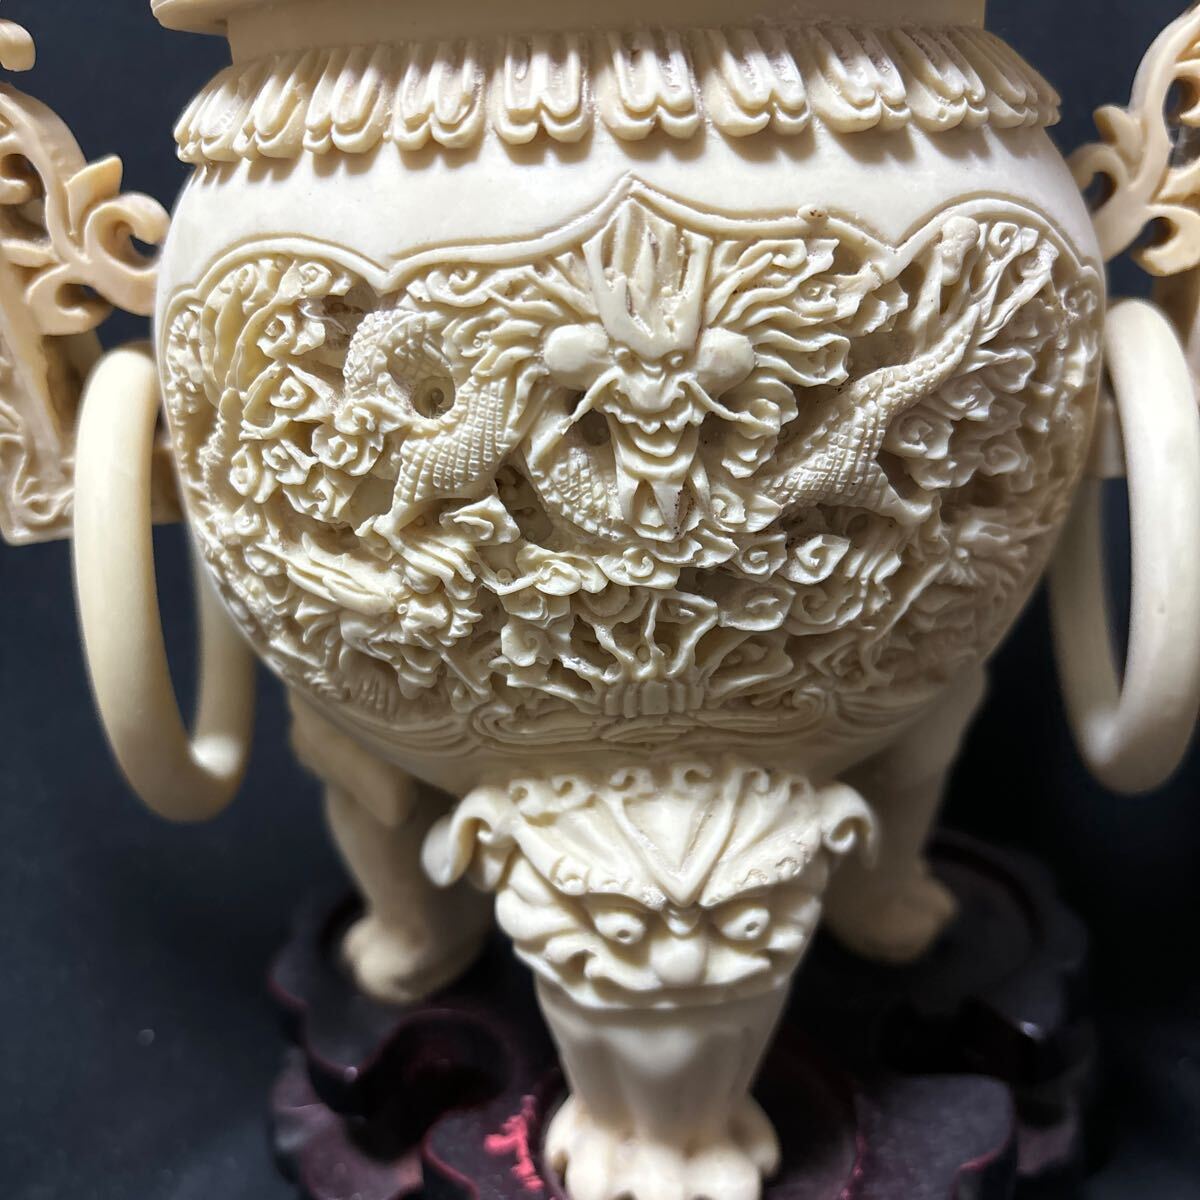 中國古美術 象牙風香炉 三つ脚 台座付き 高さ30から35㌢ 香炉 乾隆 獅子 中国美術 細密彫刻 玉獅子 香道具 飾り物 中国古玩の画像4